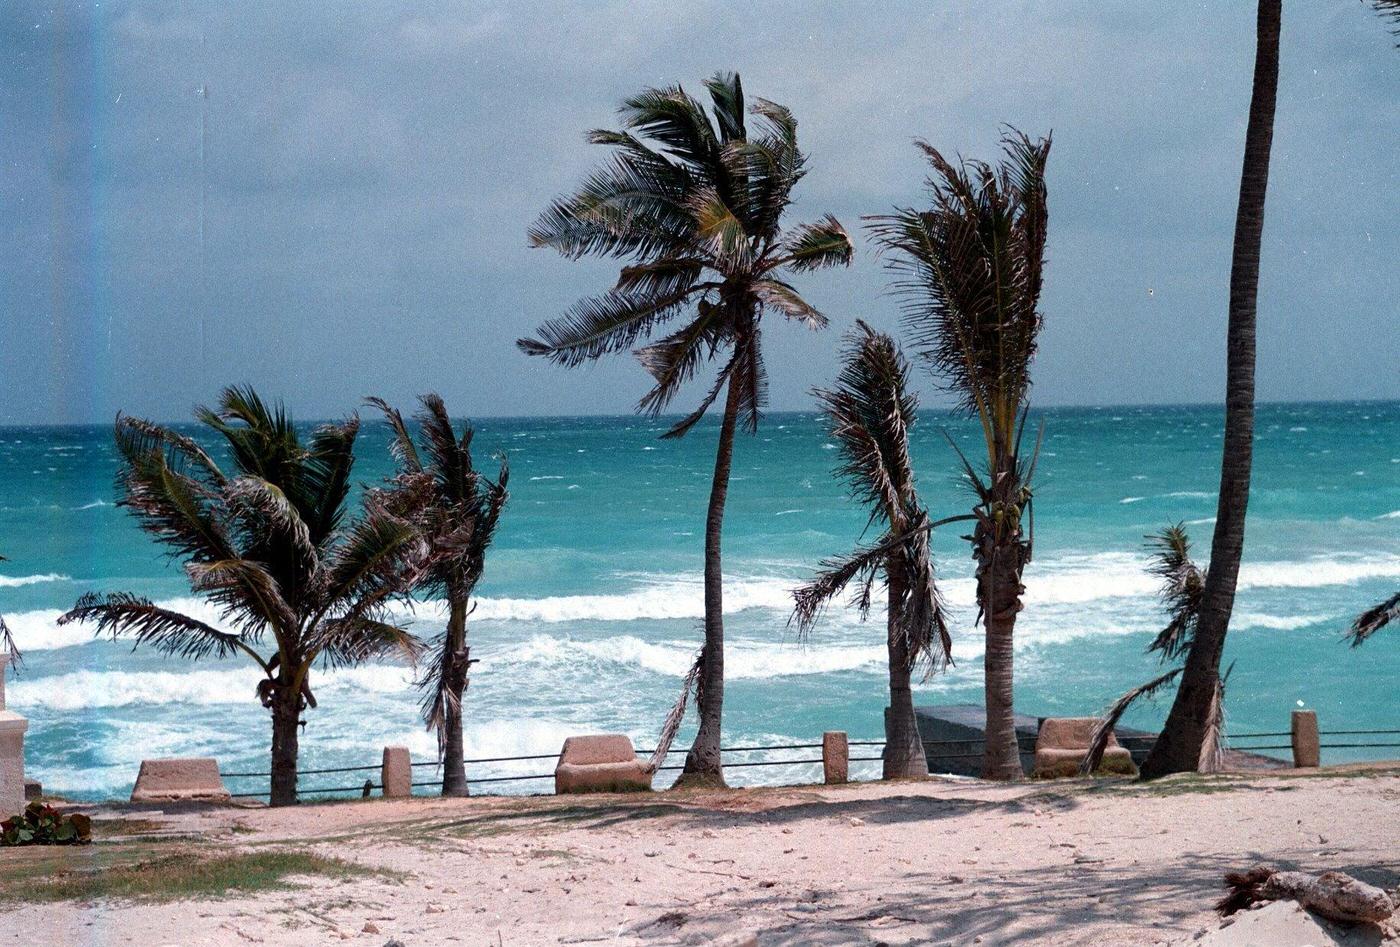 Beach, palm trees, and sea in Varadero, Cuba.